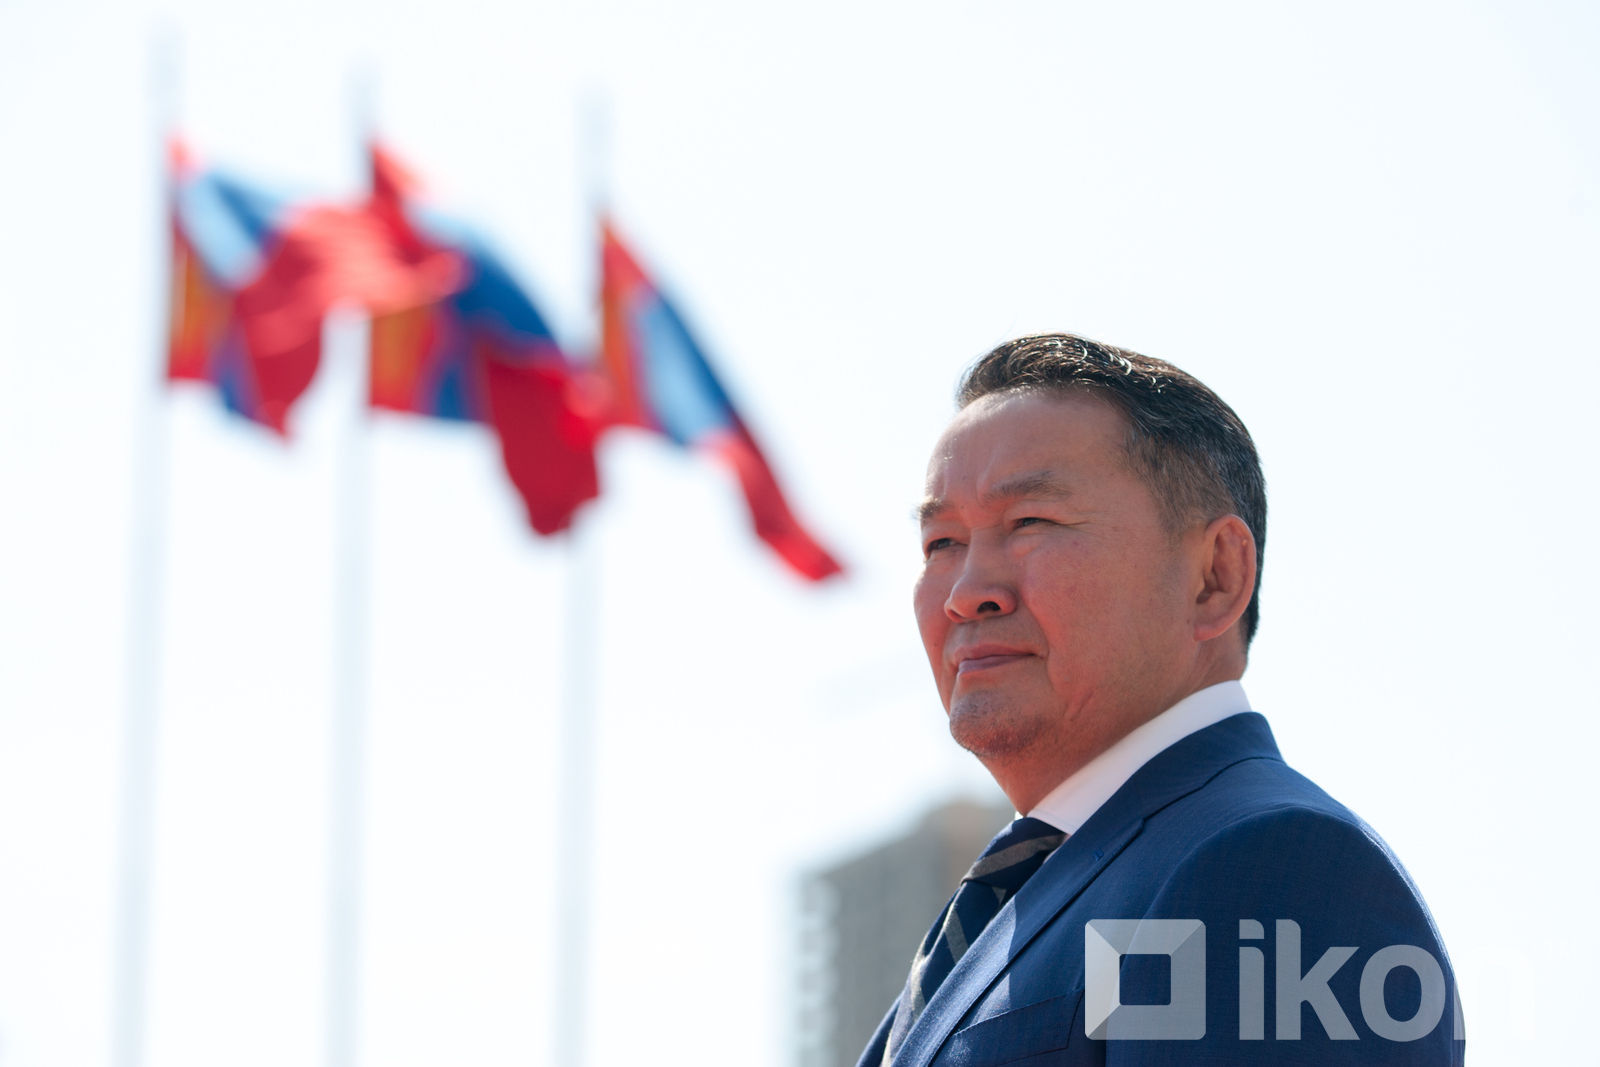 Kh.Battulga 대통령, 몽골 민주주의의 마지막 거점인 민주당은 국가의 이익을 위해 내부 분열을 끝내고 단결해야 할 때.jpg